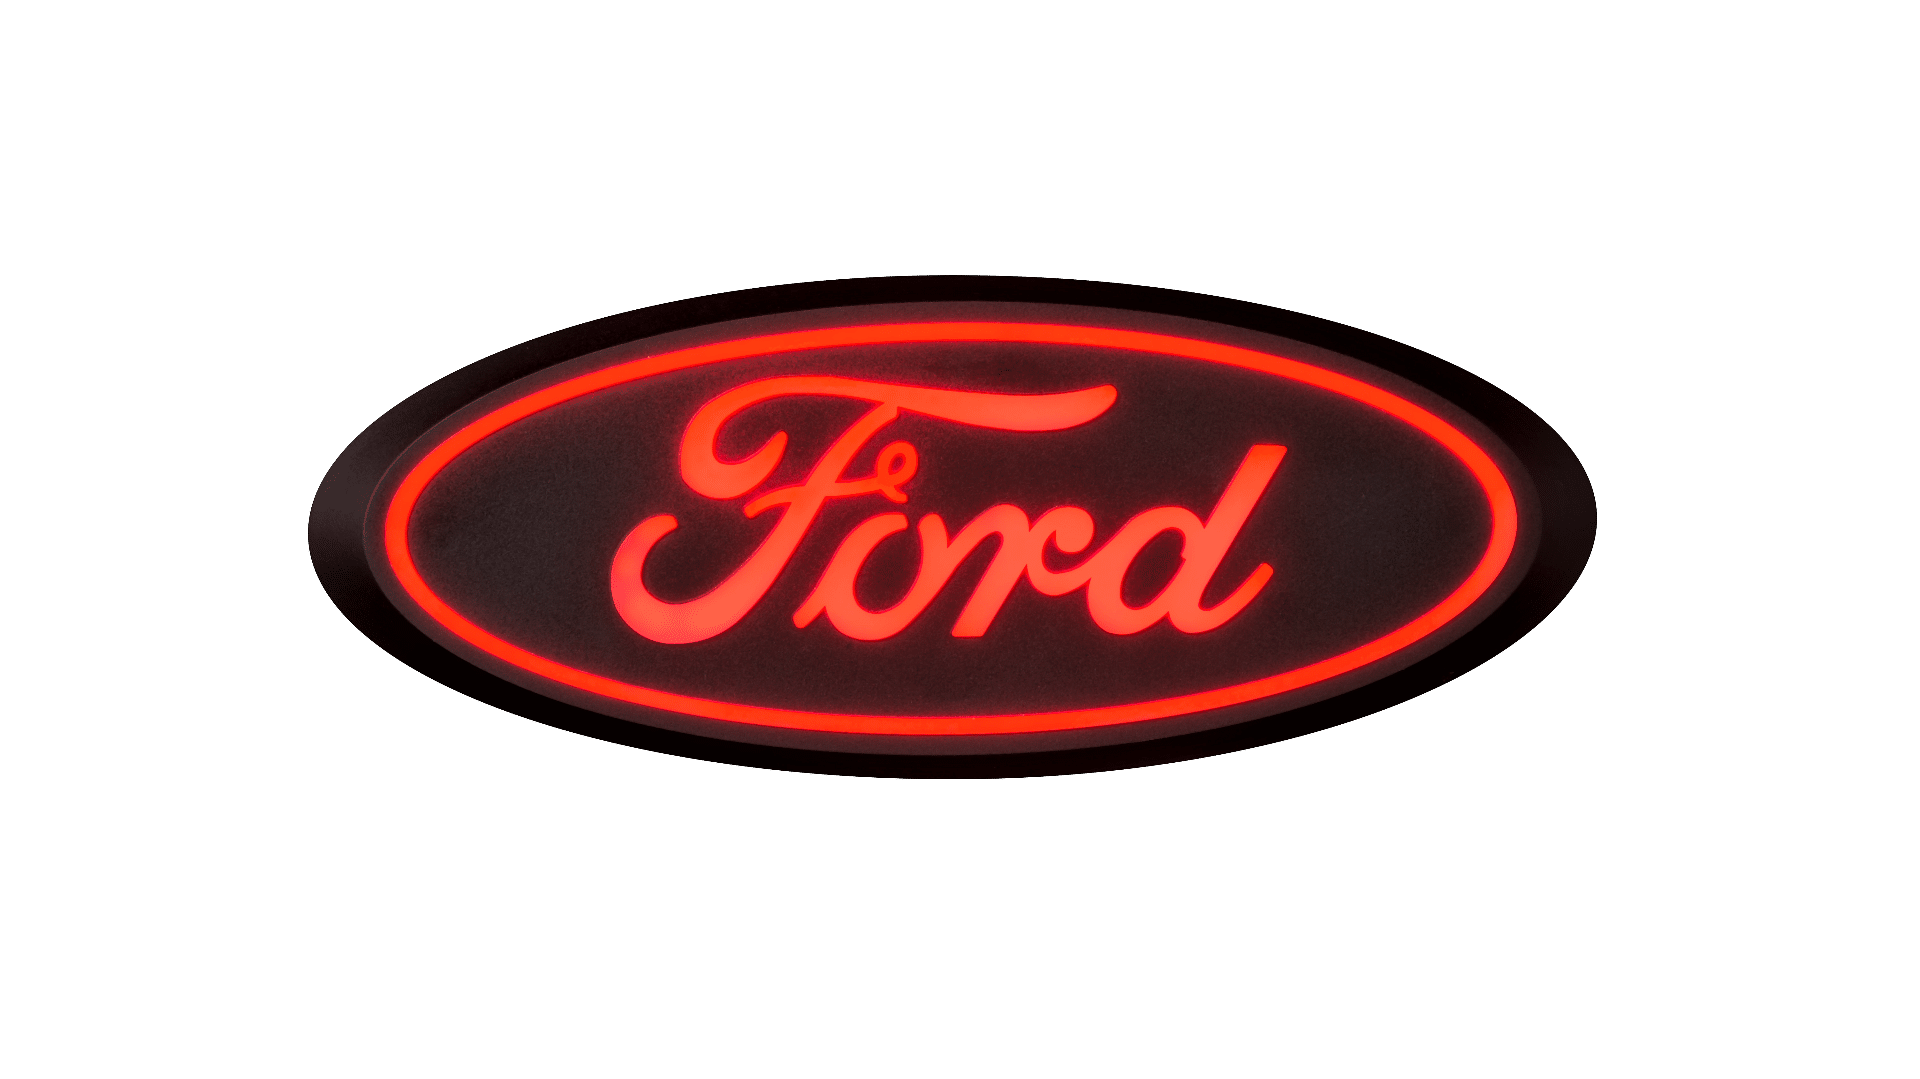 https://www.putco.com/wp-content/uploads/Putco-Ford-Emblem-Rear-Red-LED-Lights-1.png